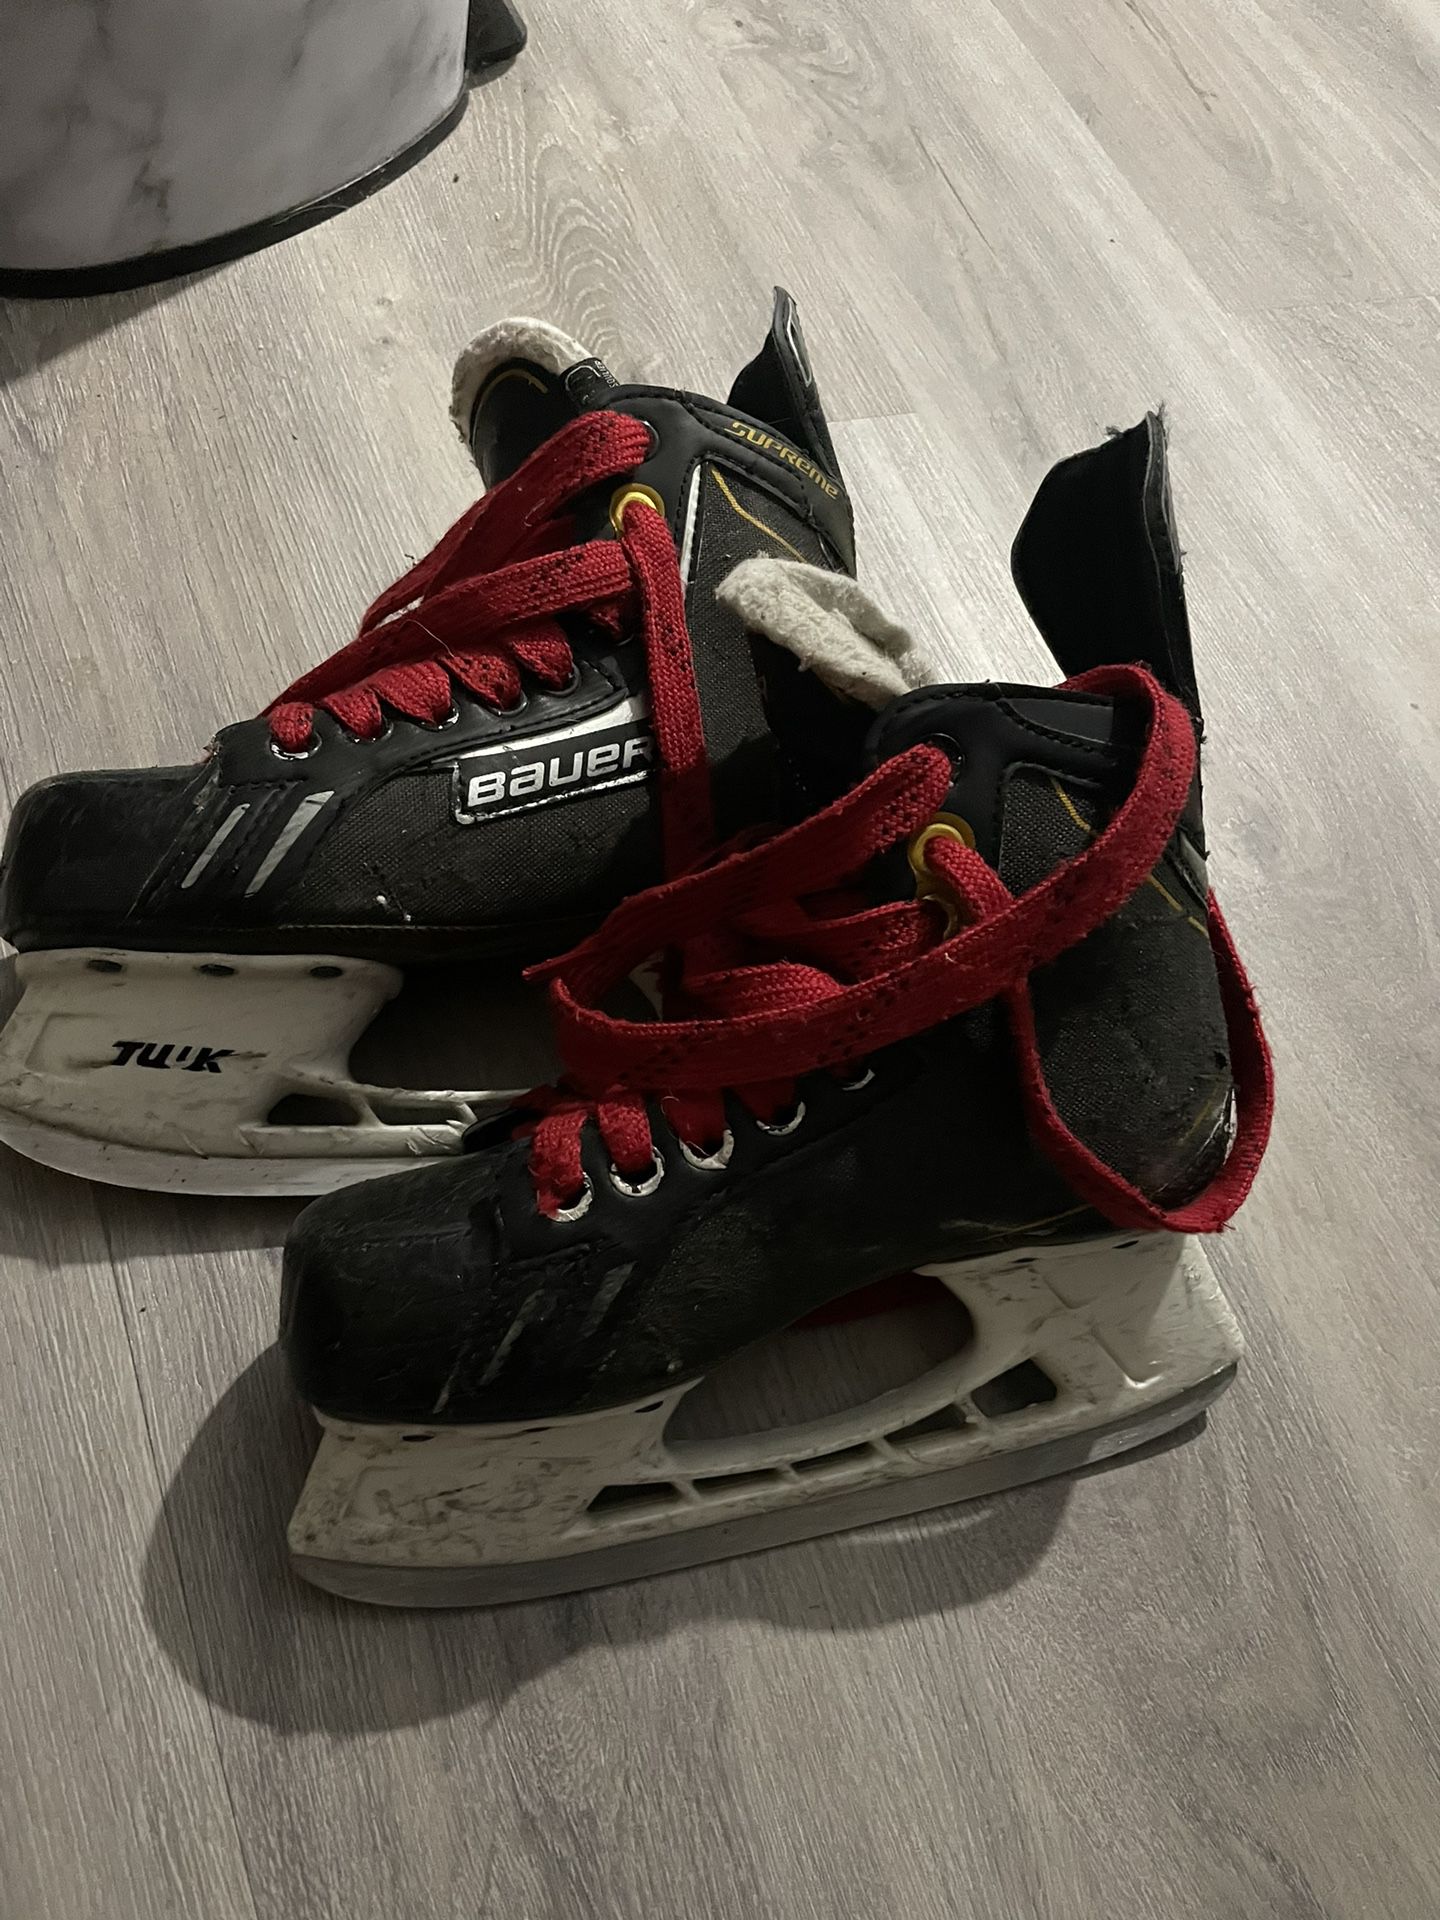 Bauer Supreme Youth Hockey Skates